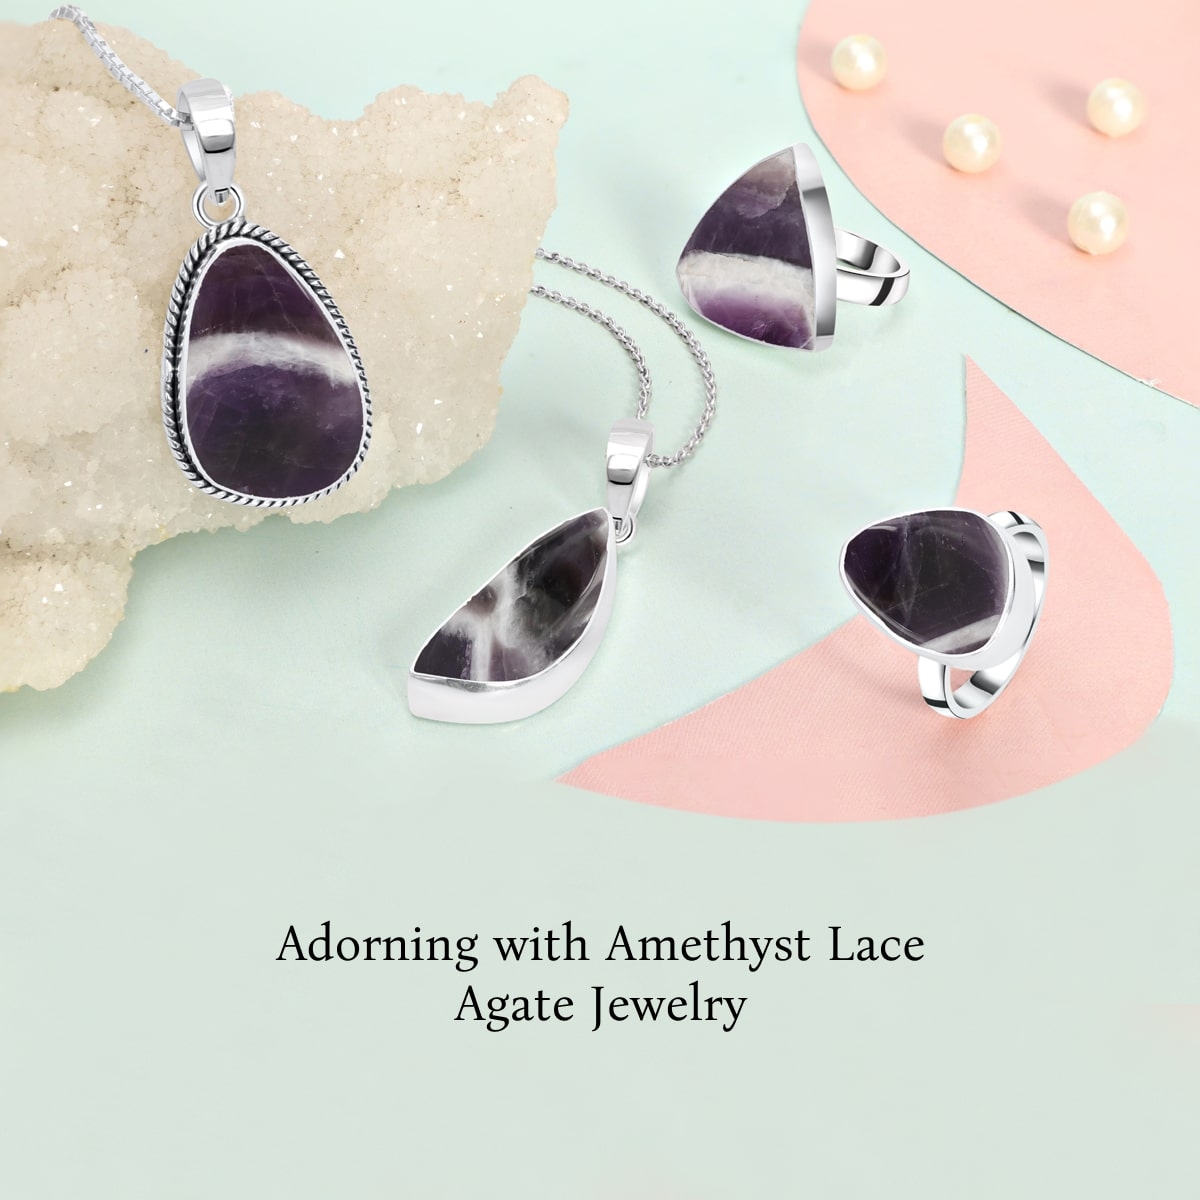 Wearing Amethyst Lace Agate Jewelry